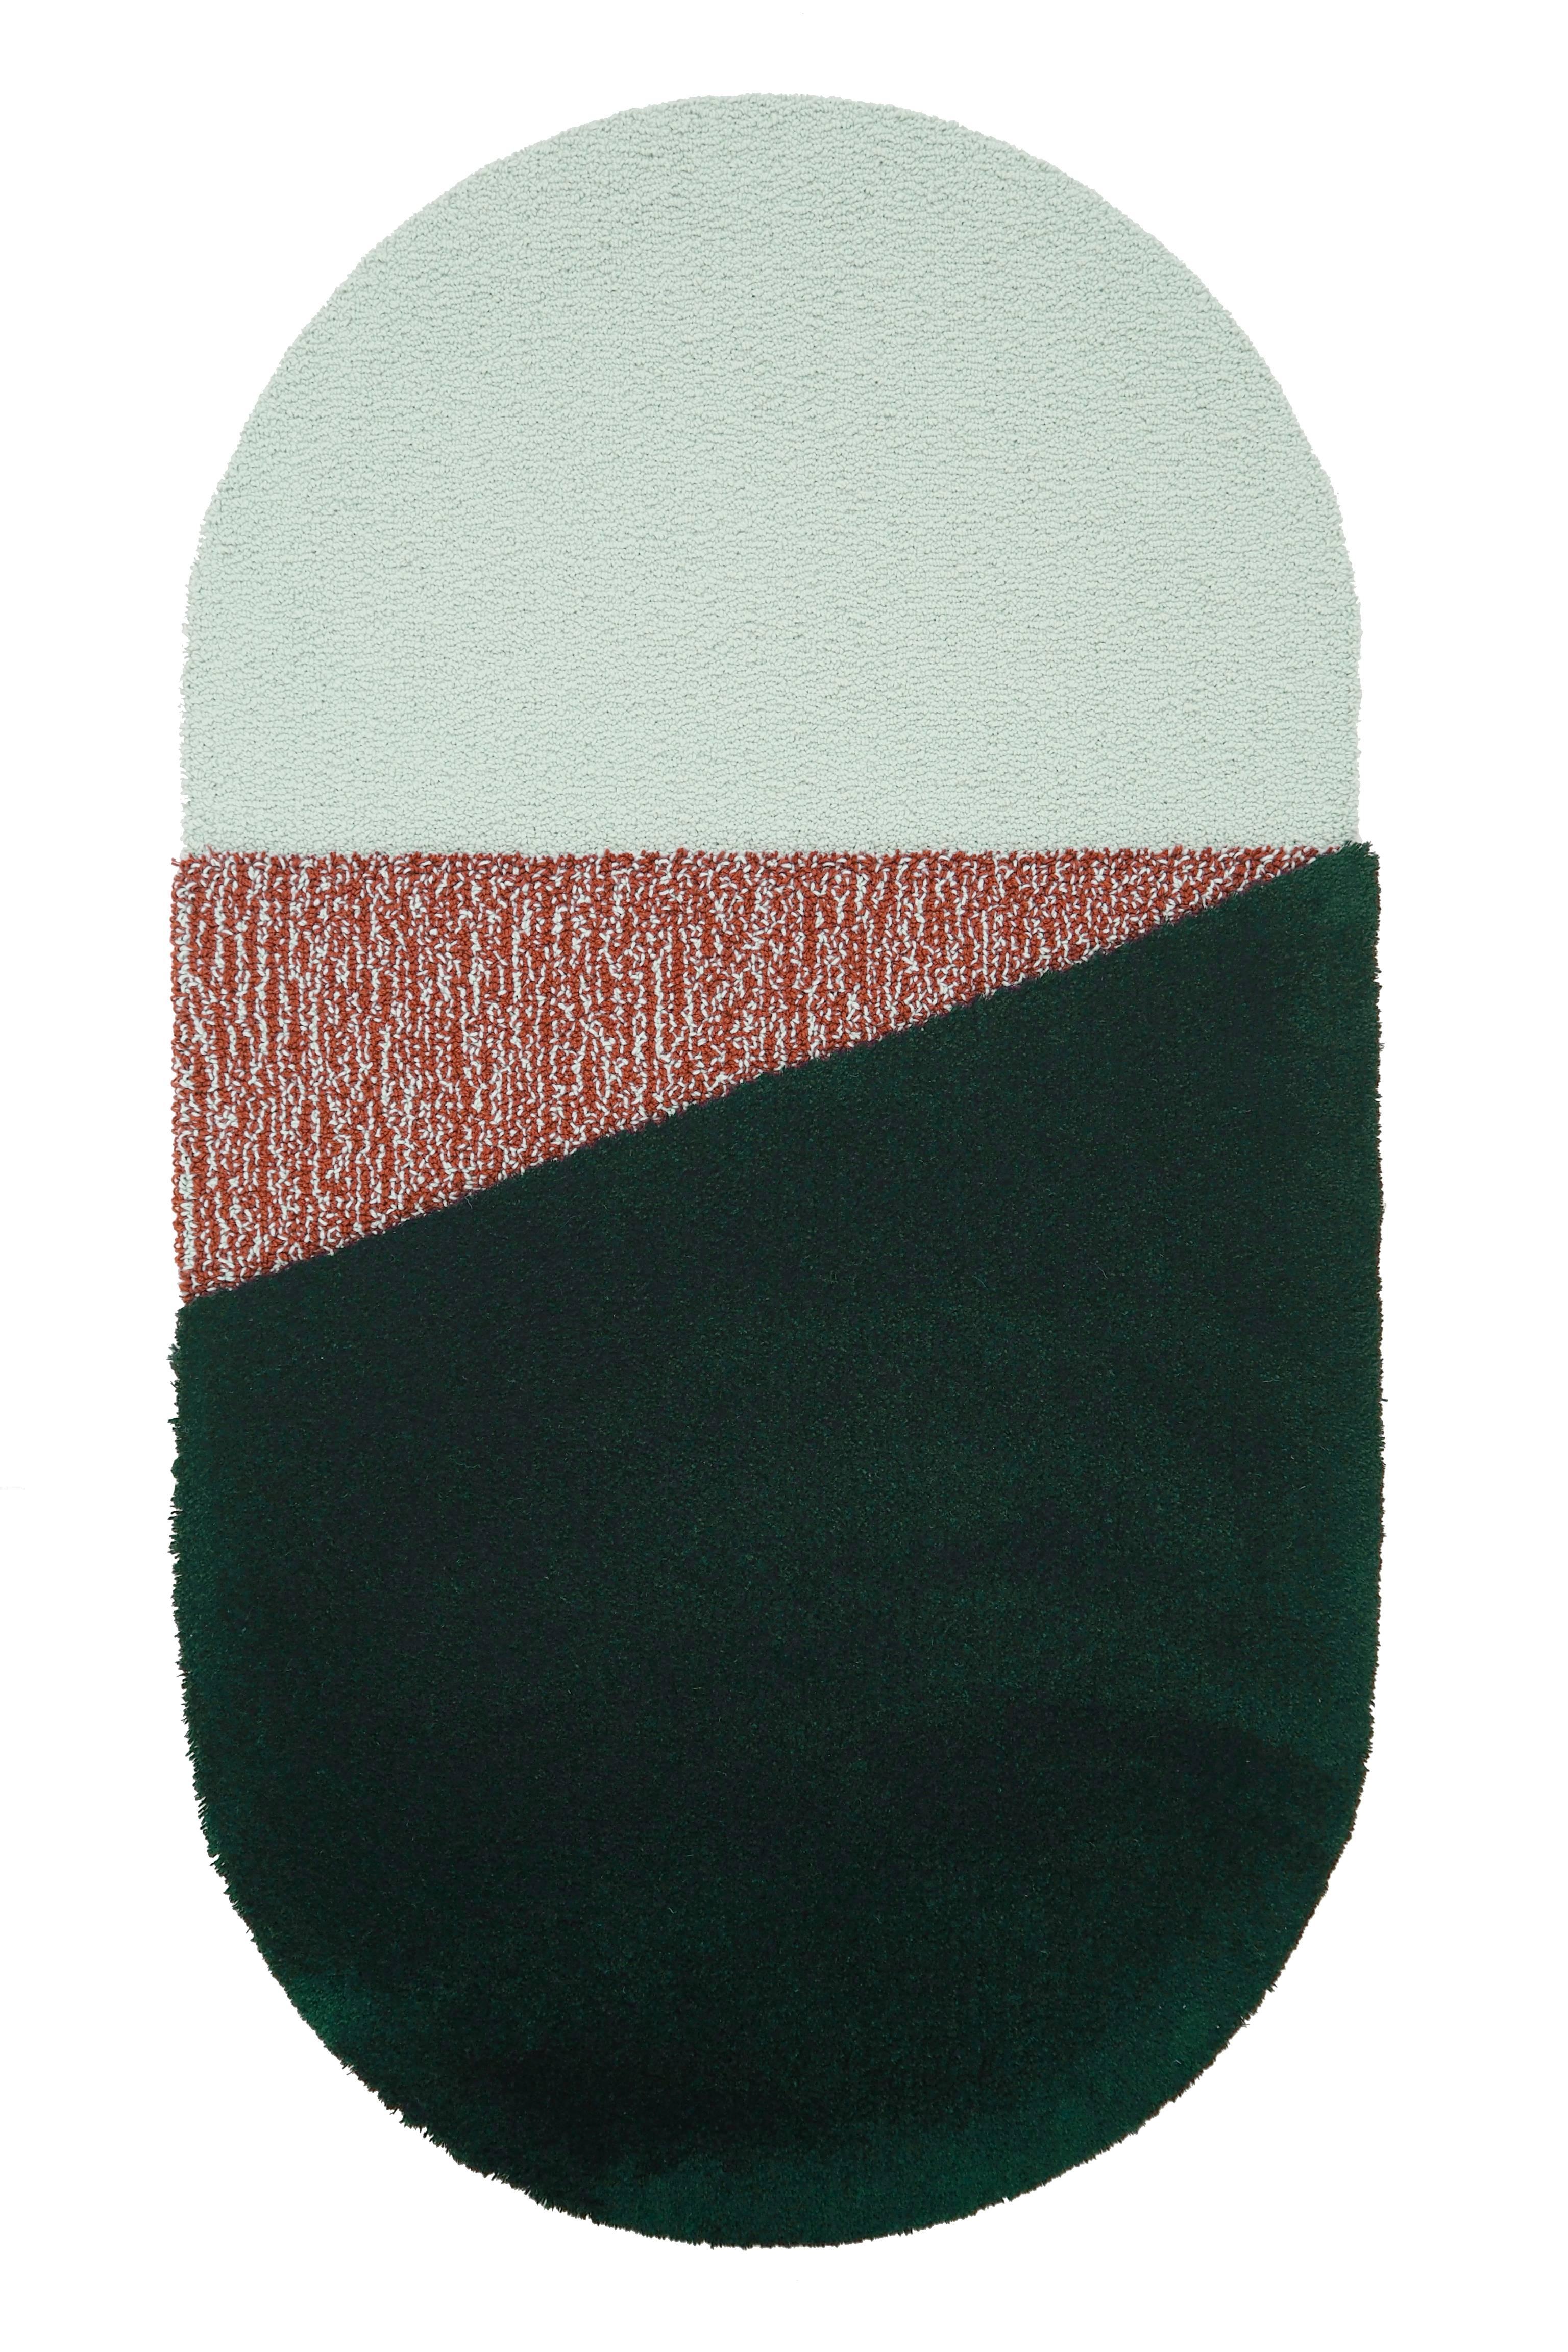 Contemporary Large Green Oci Rug Triptych by Seraina Lareida For Sale